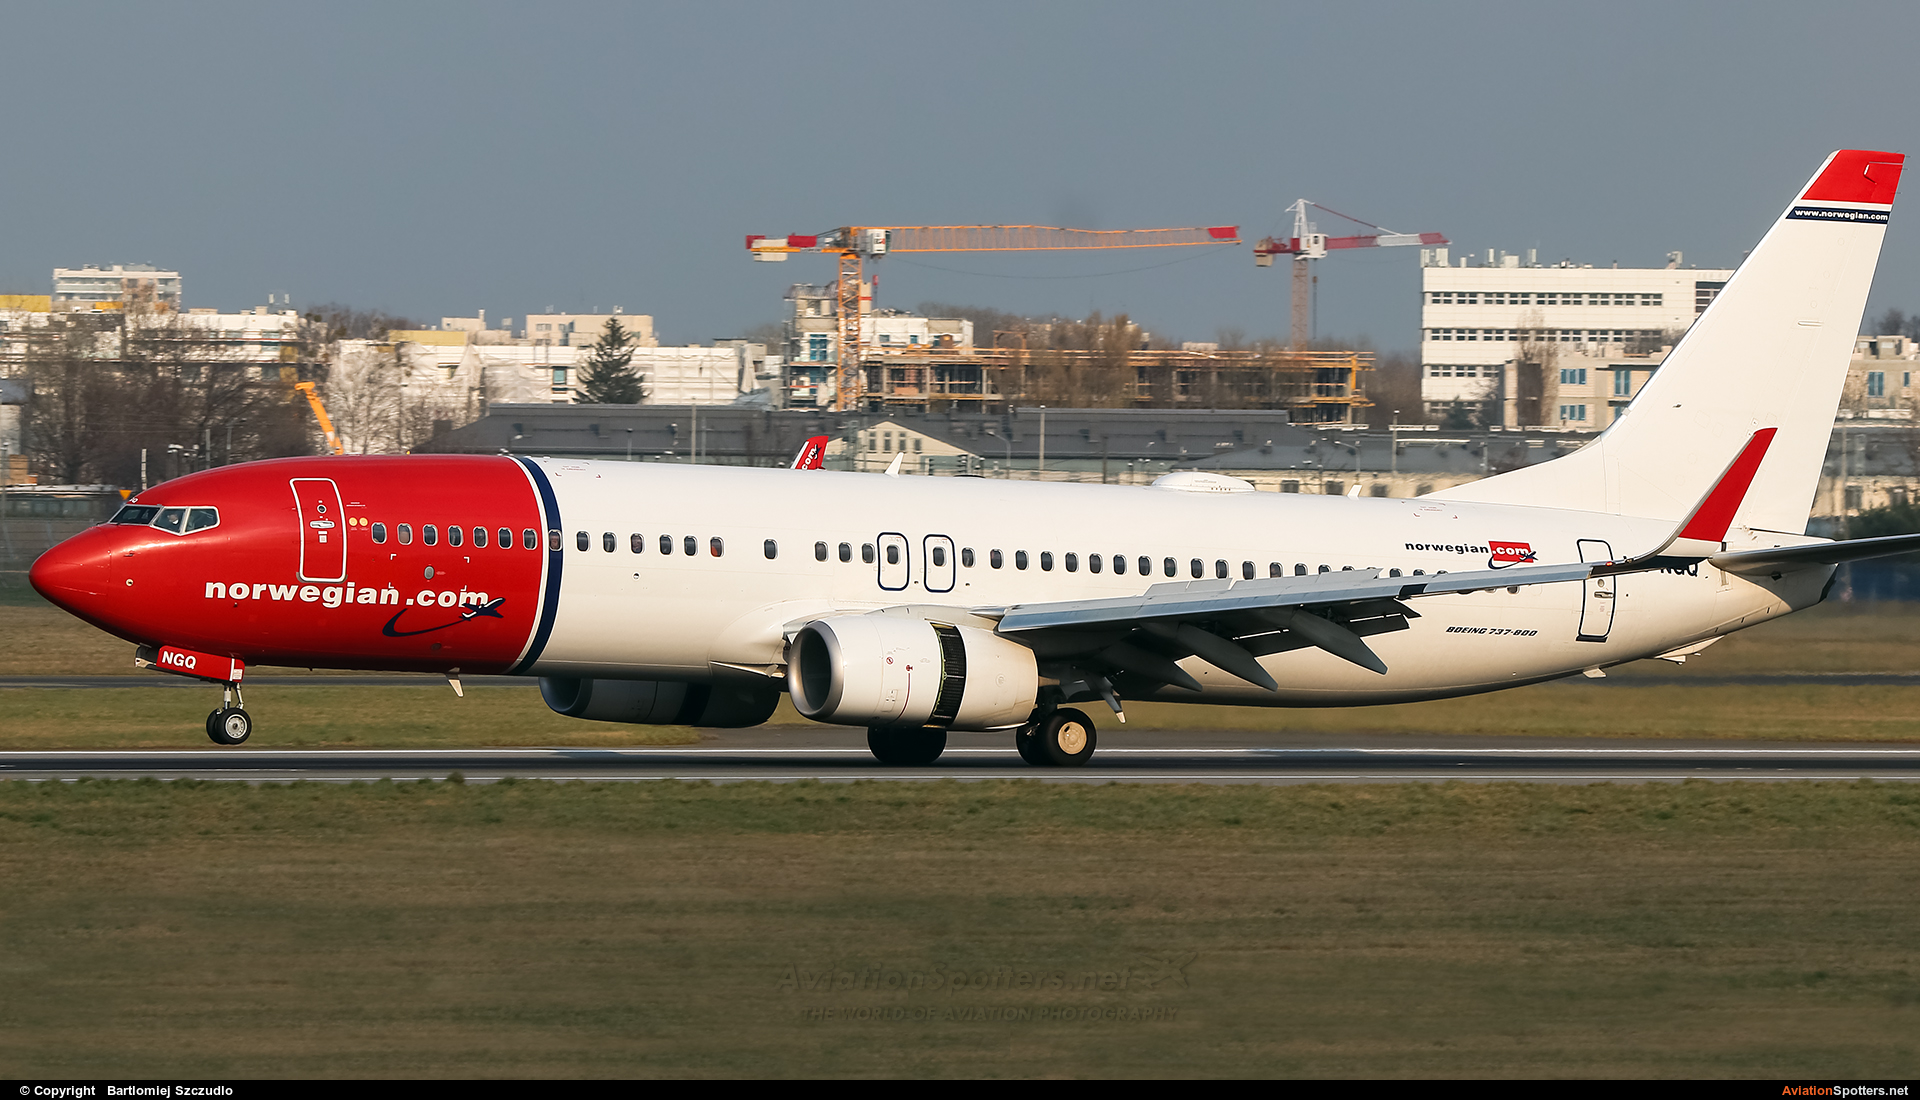 Norwegian Air Shuttle  -  737-800  (LN-NGQ) By Bartlomiej Szczudlo  (BartekSzczudlo)